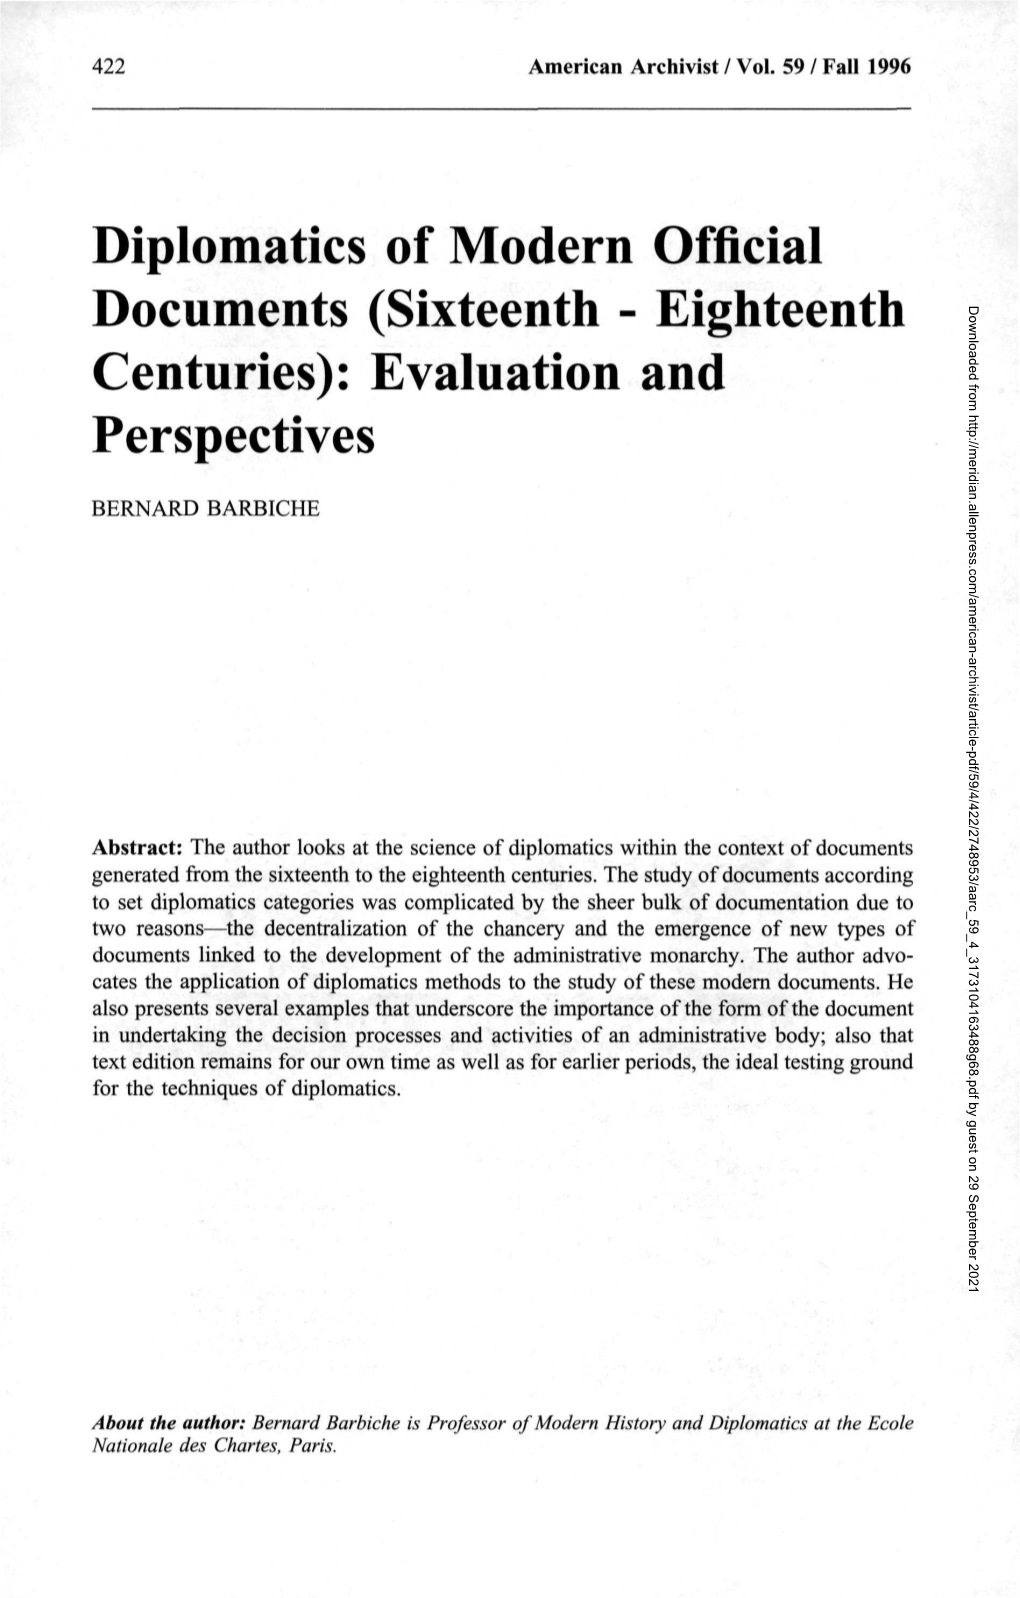 Diplomatics of Modern Official Documents (Sixteenth